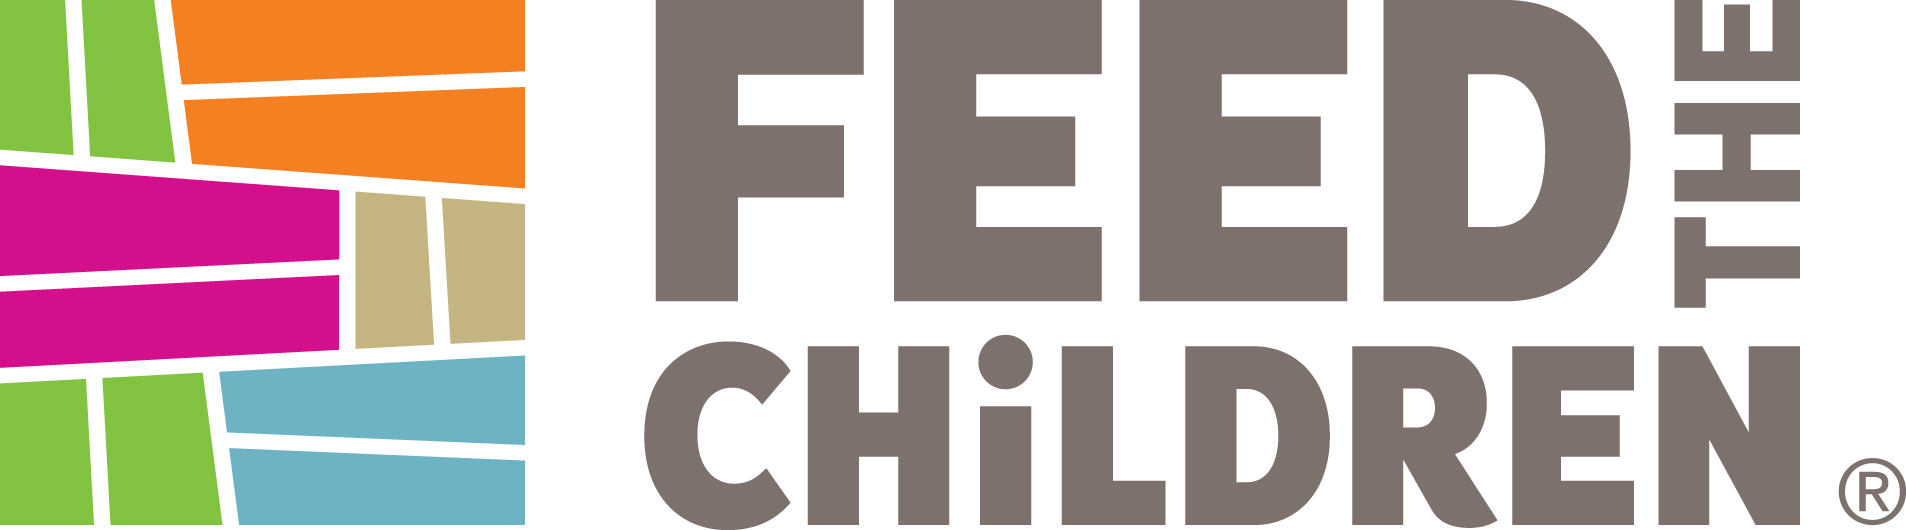 Feed the Children Logo